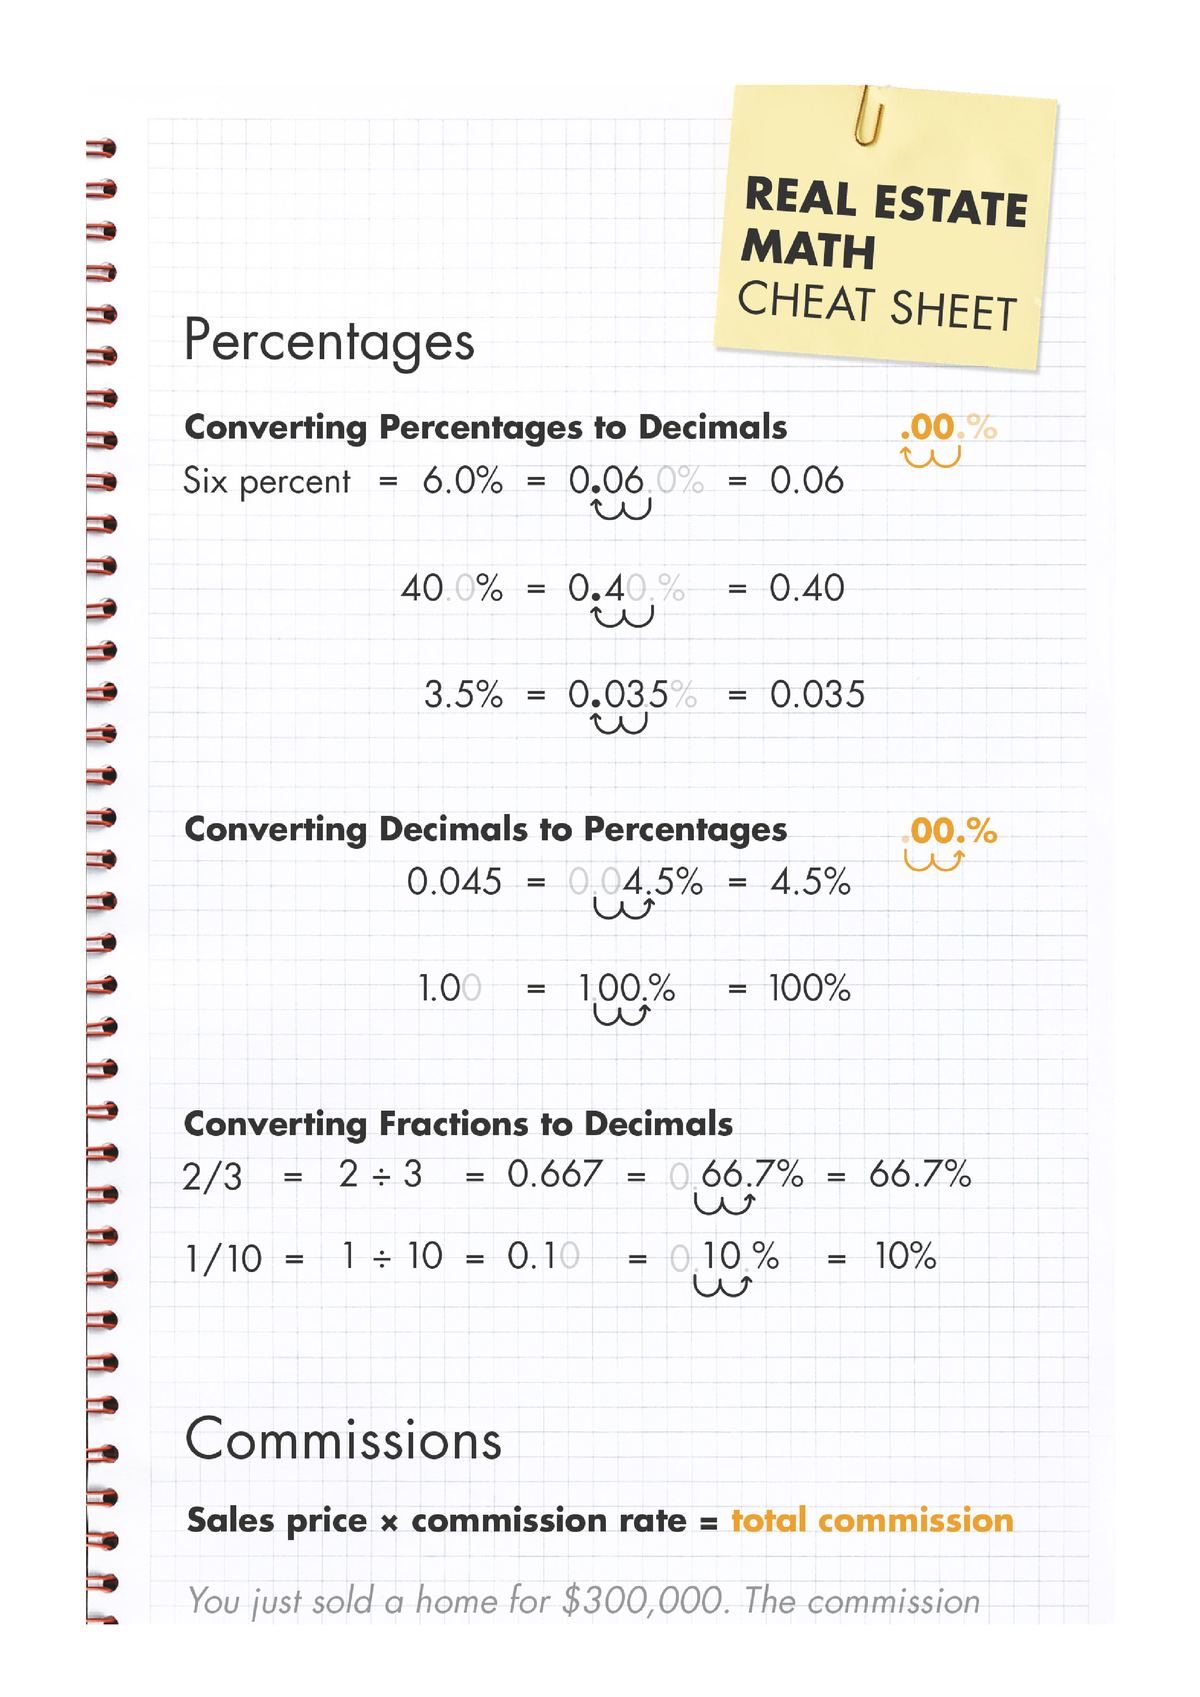 real-estate-math-cheat-sheet-stbps-238-studocu